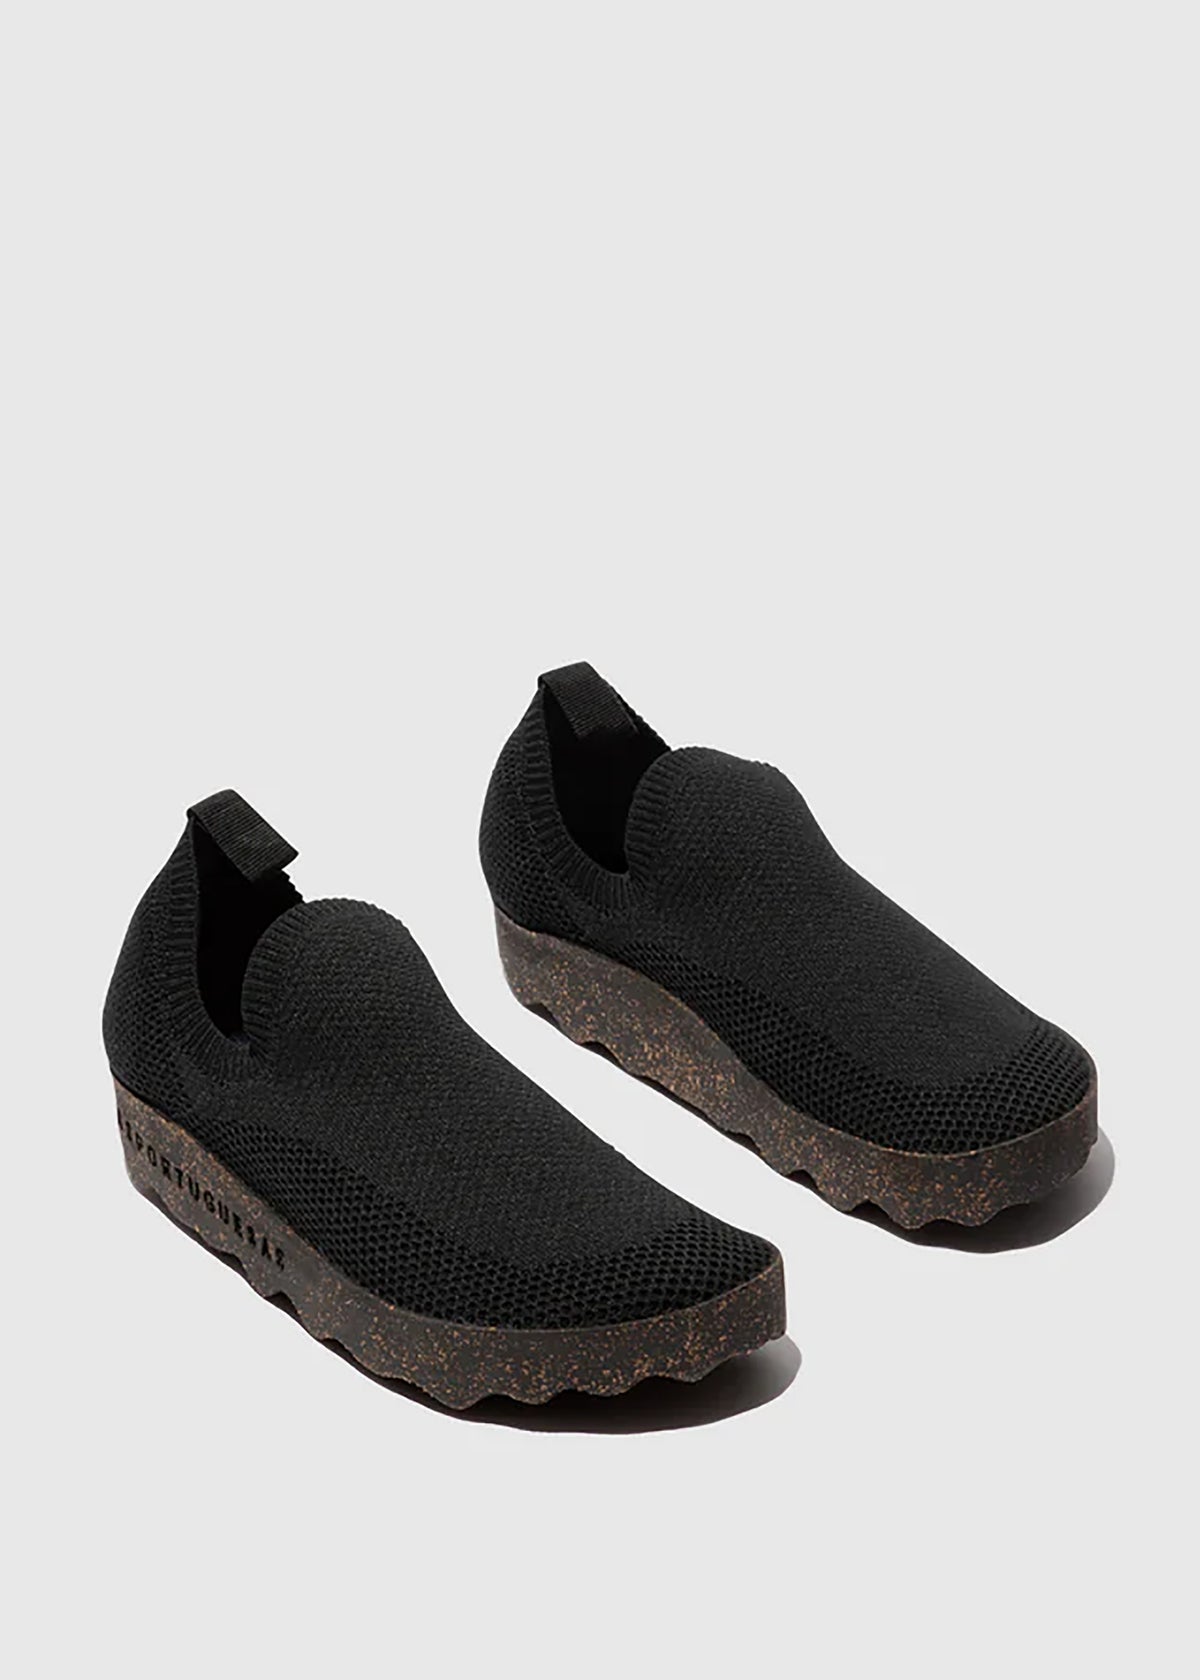 Clip sneakers - black elastic knit